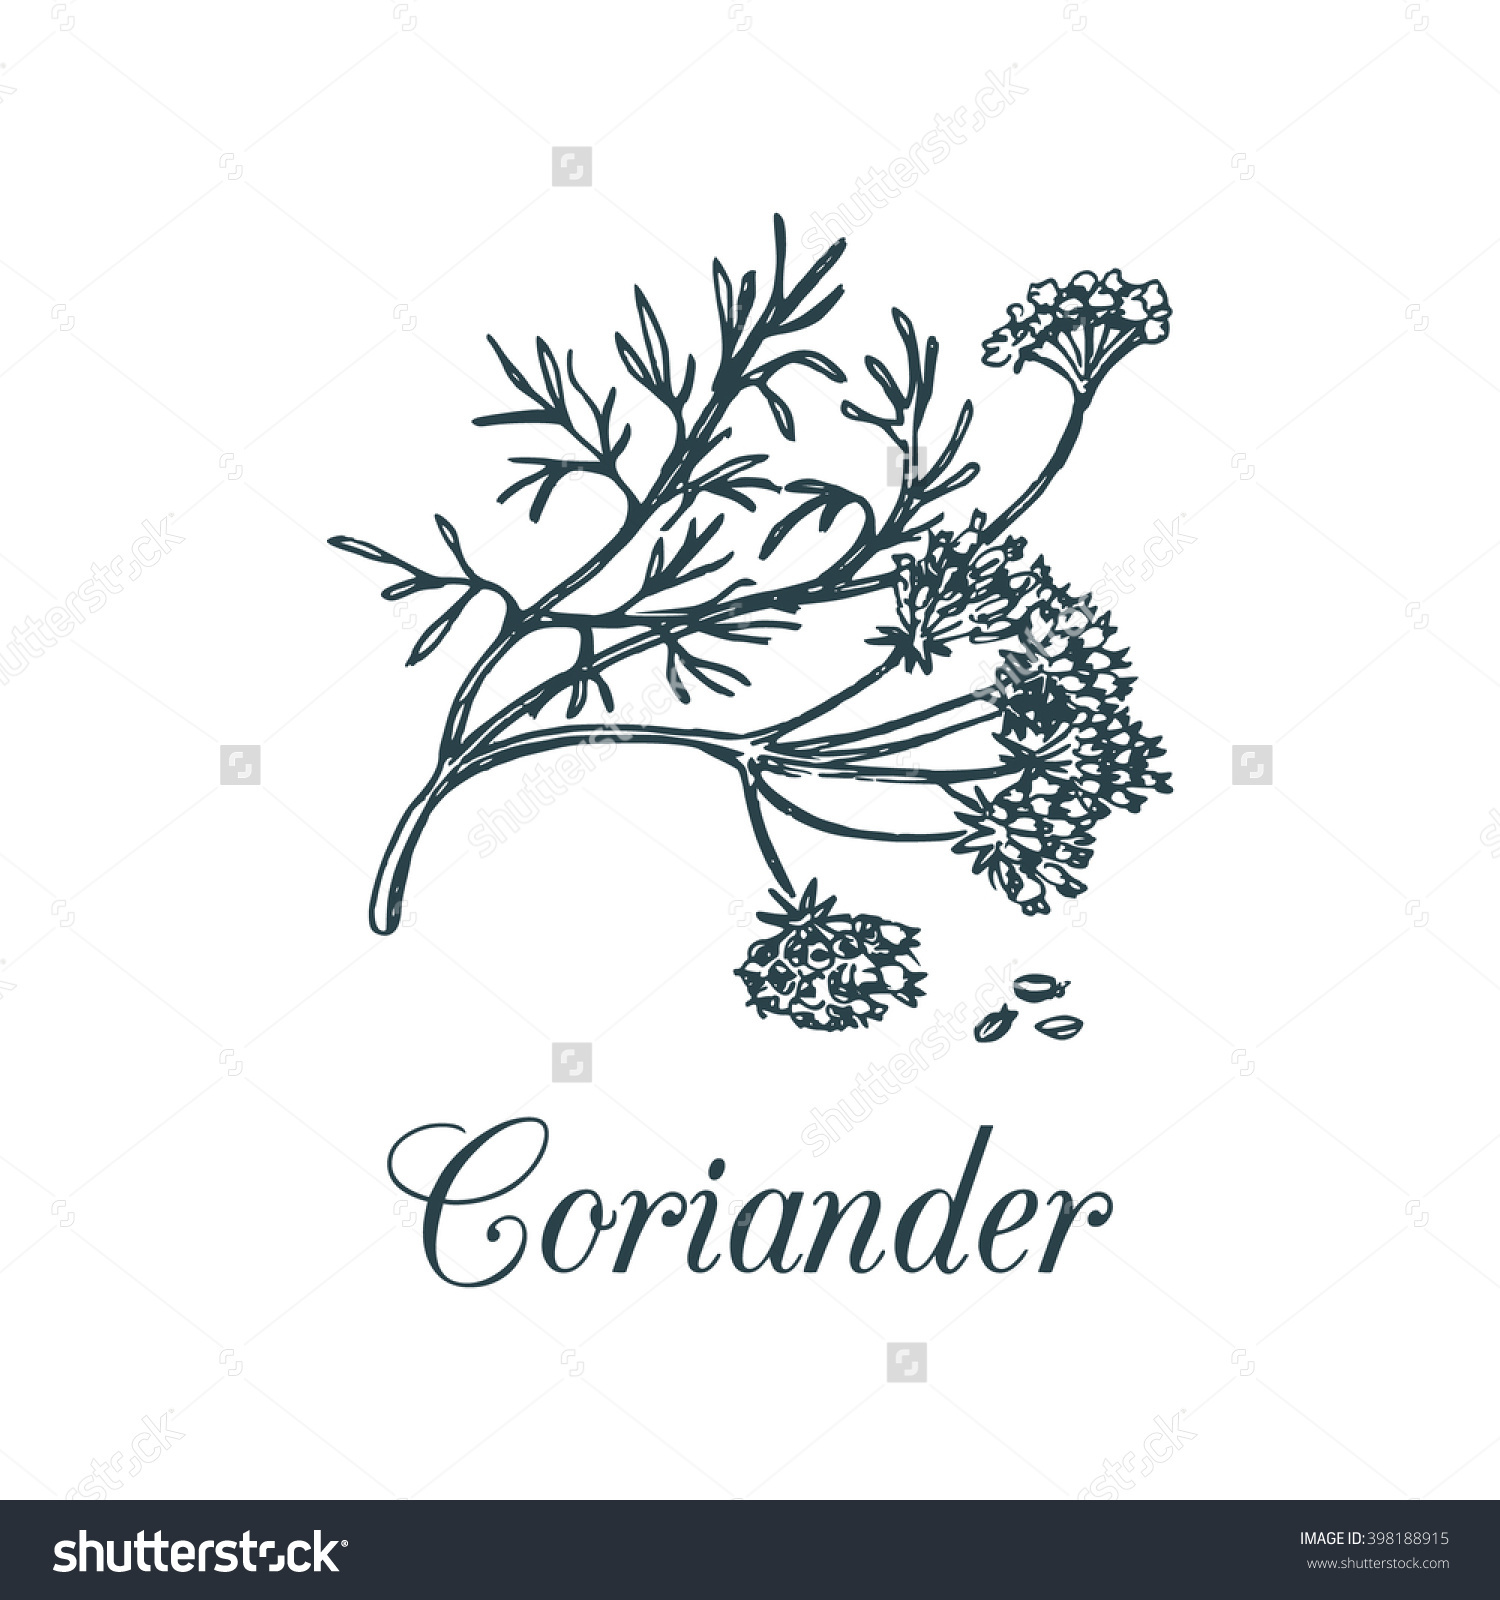 Vector Coriander Illustration Seeds Flowers Hand Stock Vector.